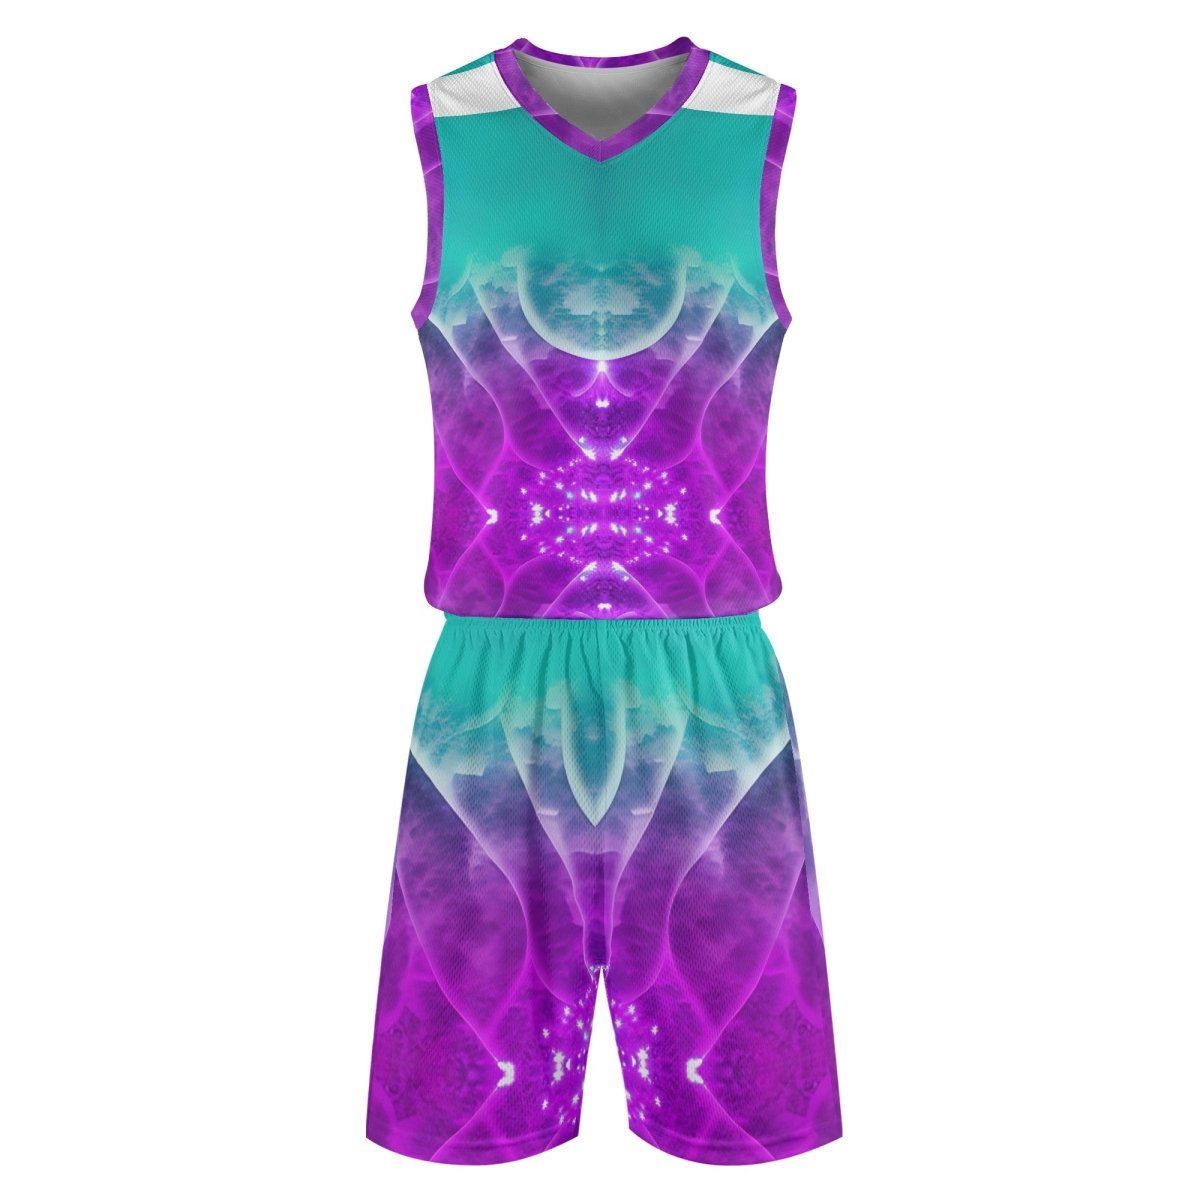 Teal and purple Customize Adult Basketball Sports Uniform Jersey & Shorts - Iron Phoenix GHG